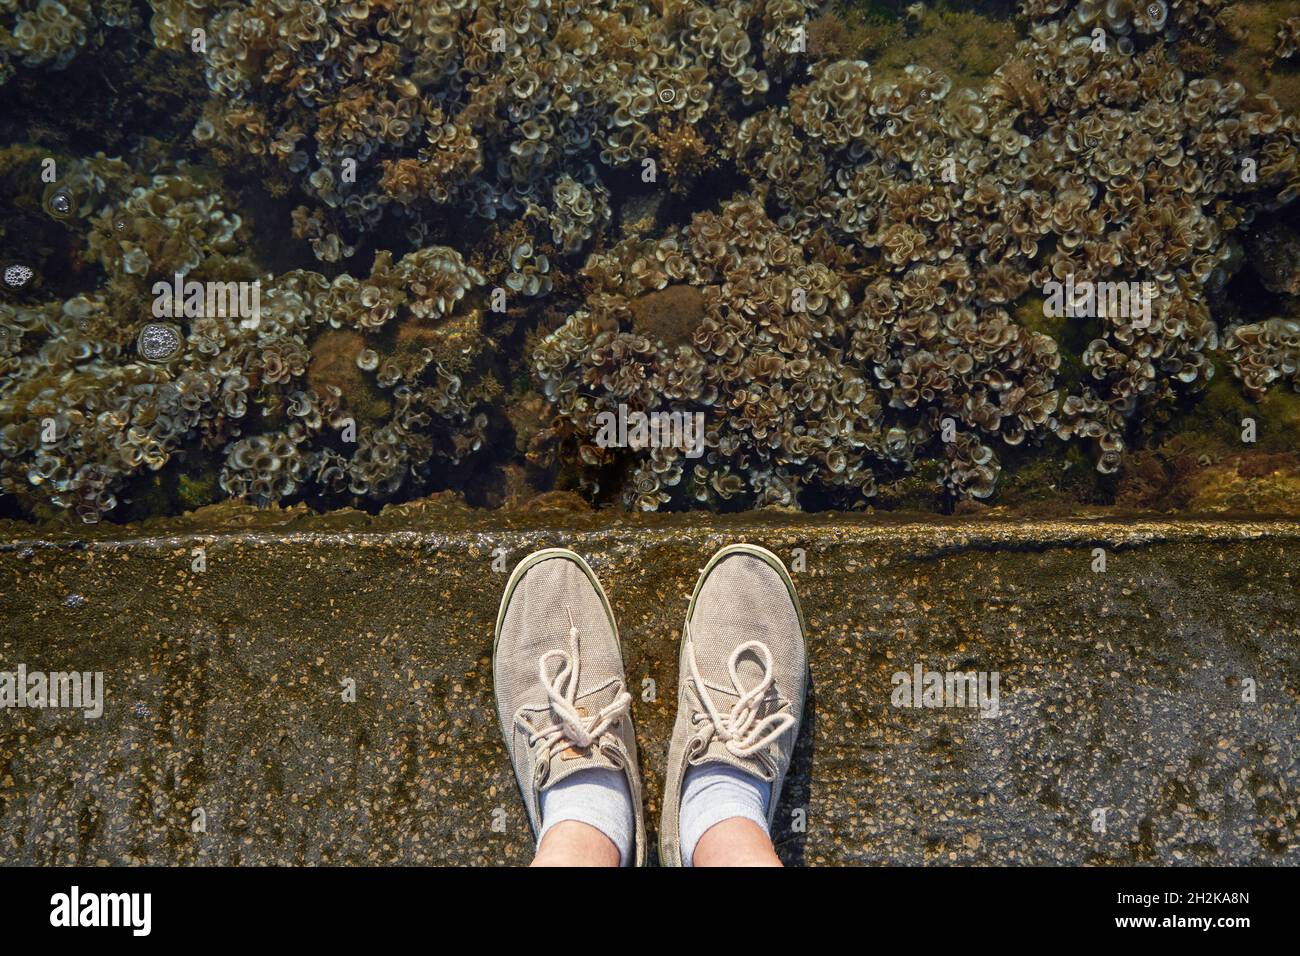 Human feet stand next to the sea and seaweed. Stock Photo